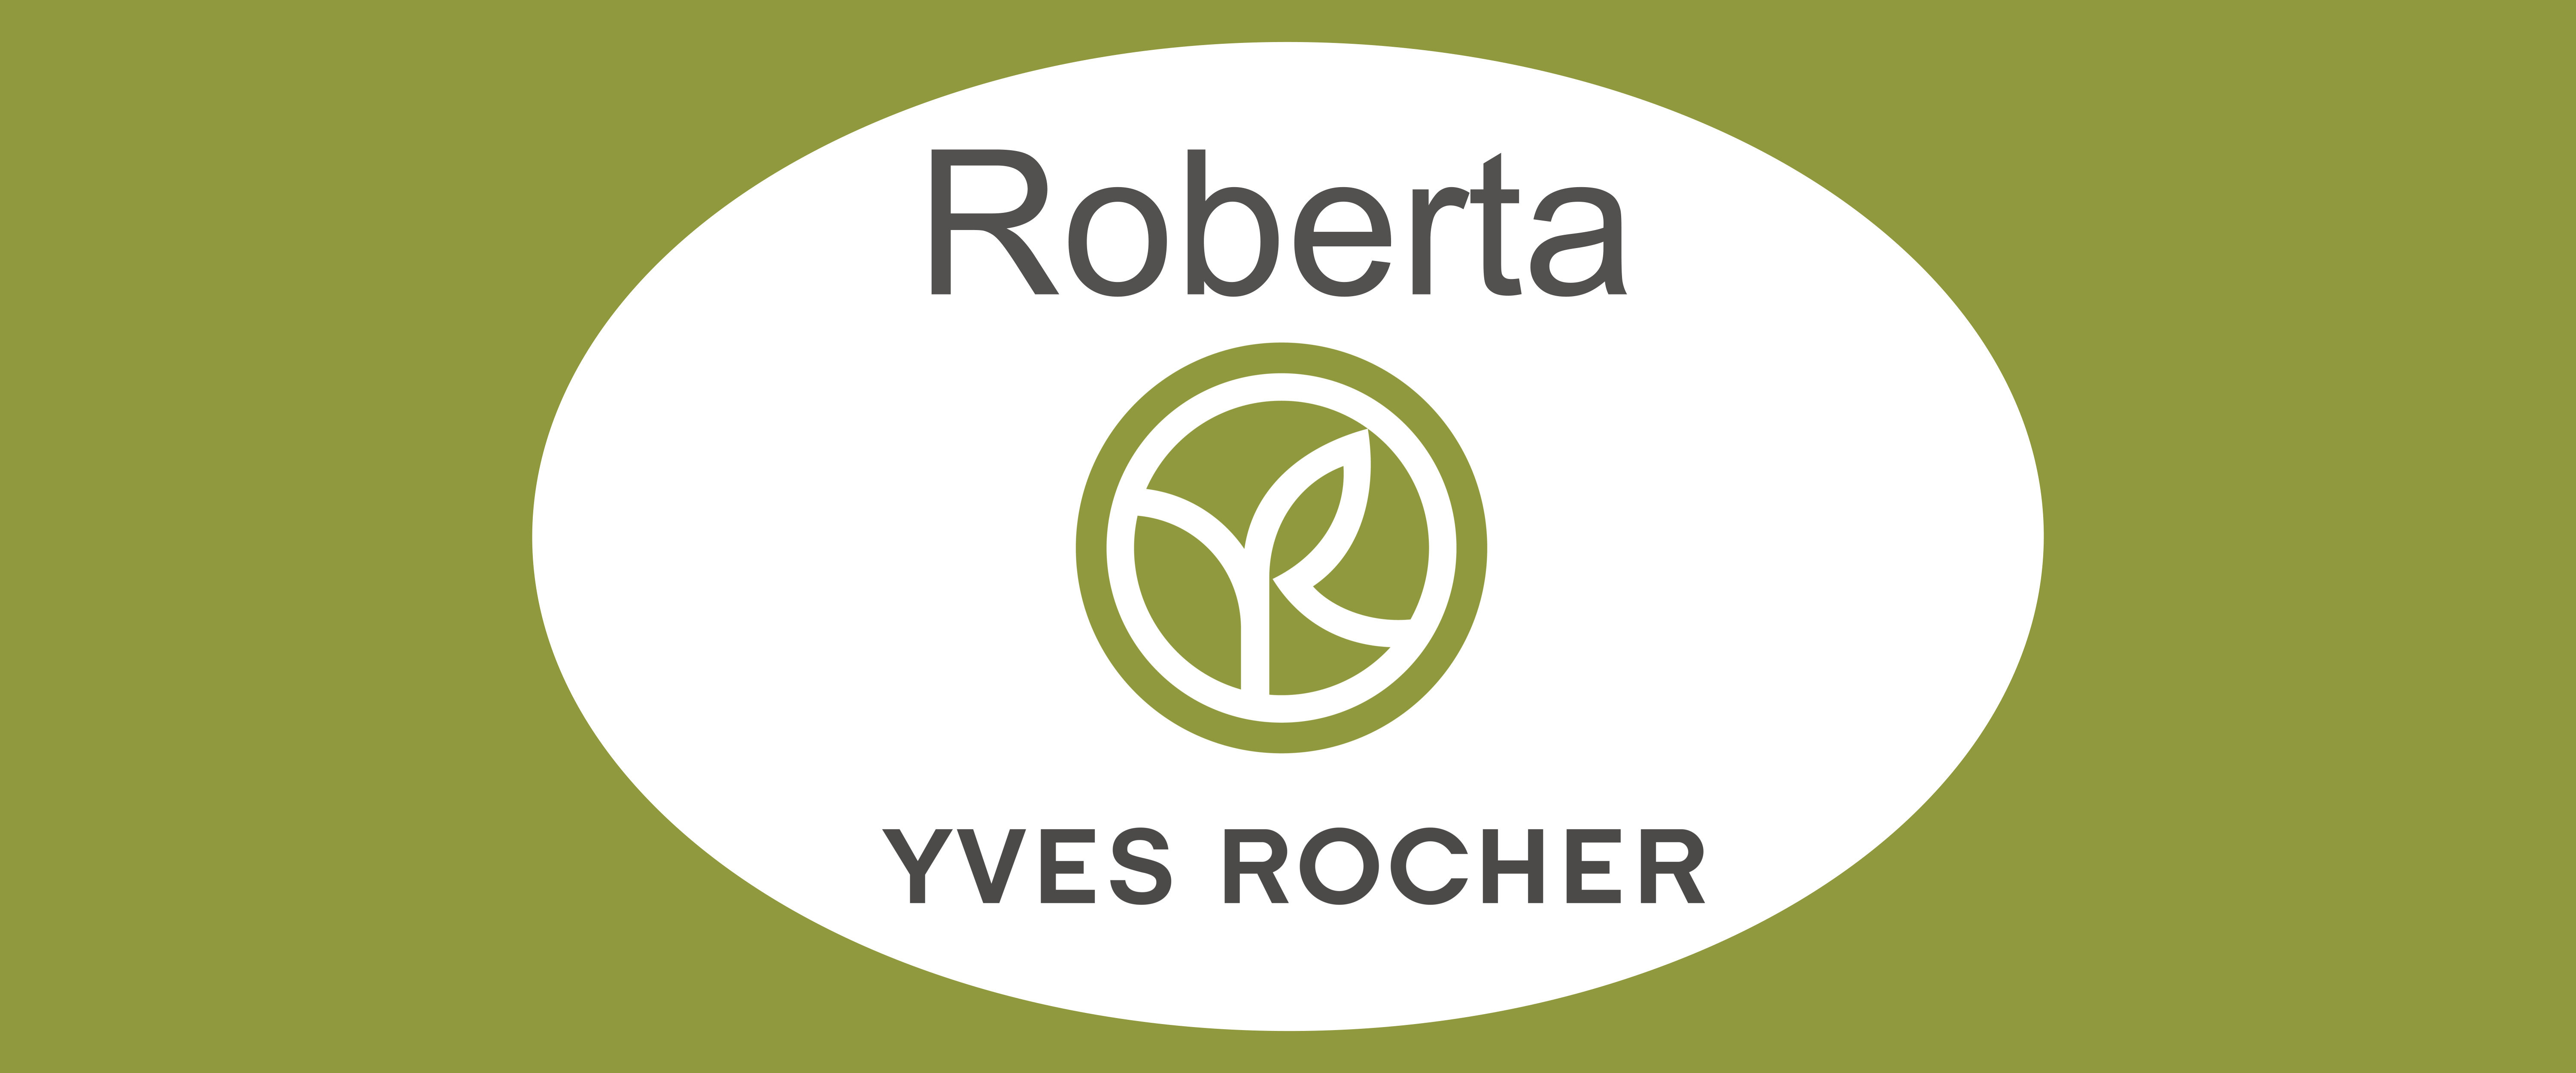 ROBERTA YVES ROCHER